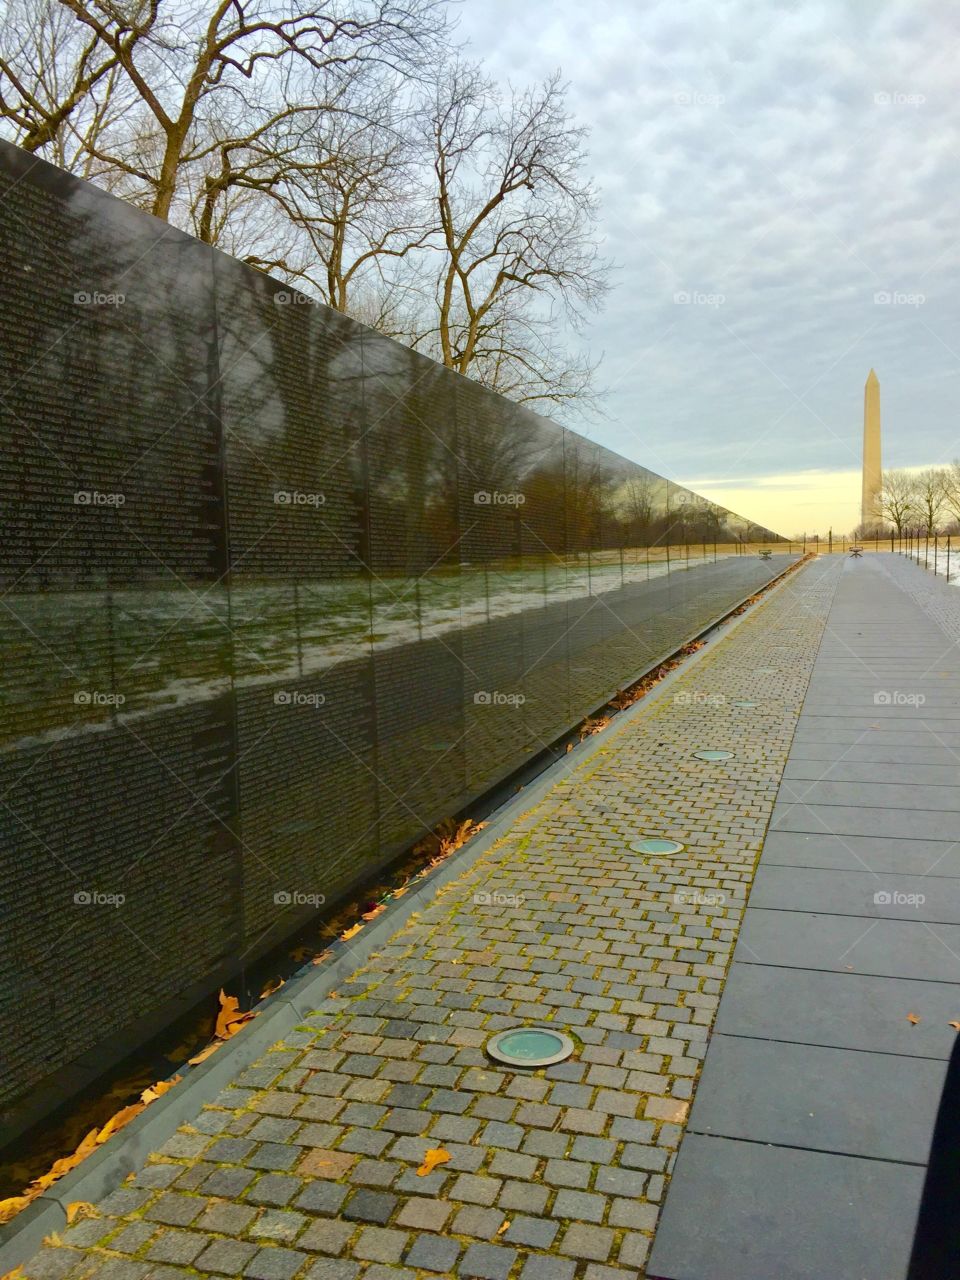 Washington D.C. stroll